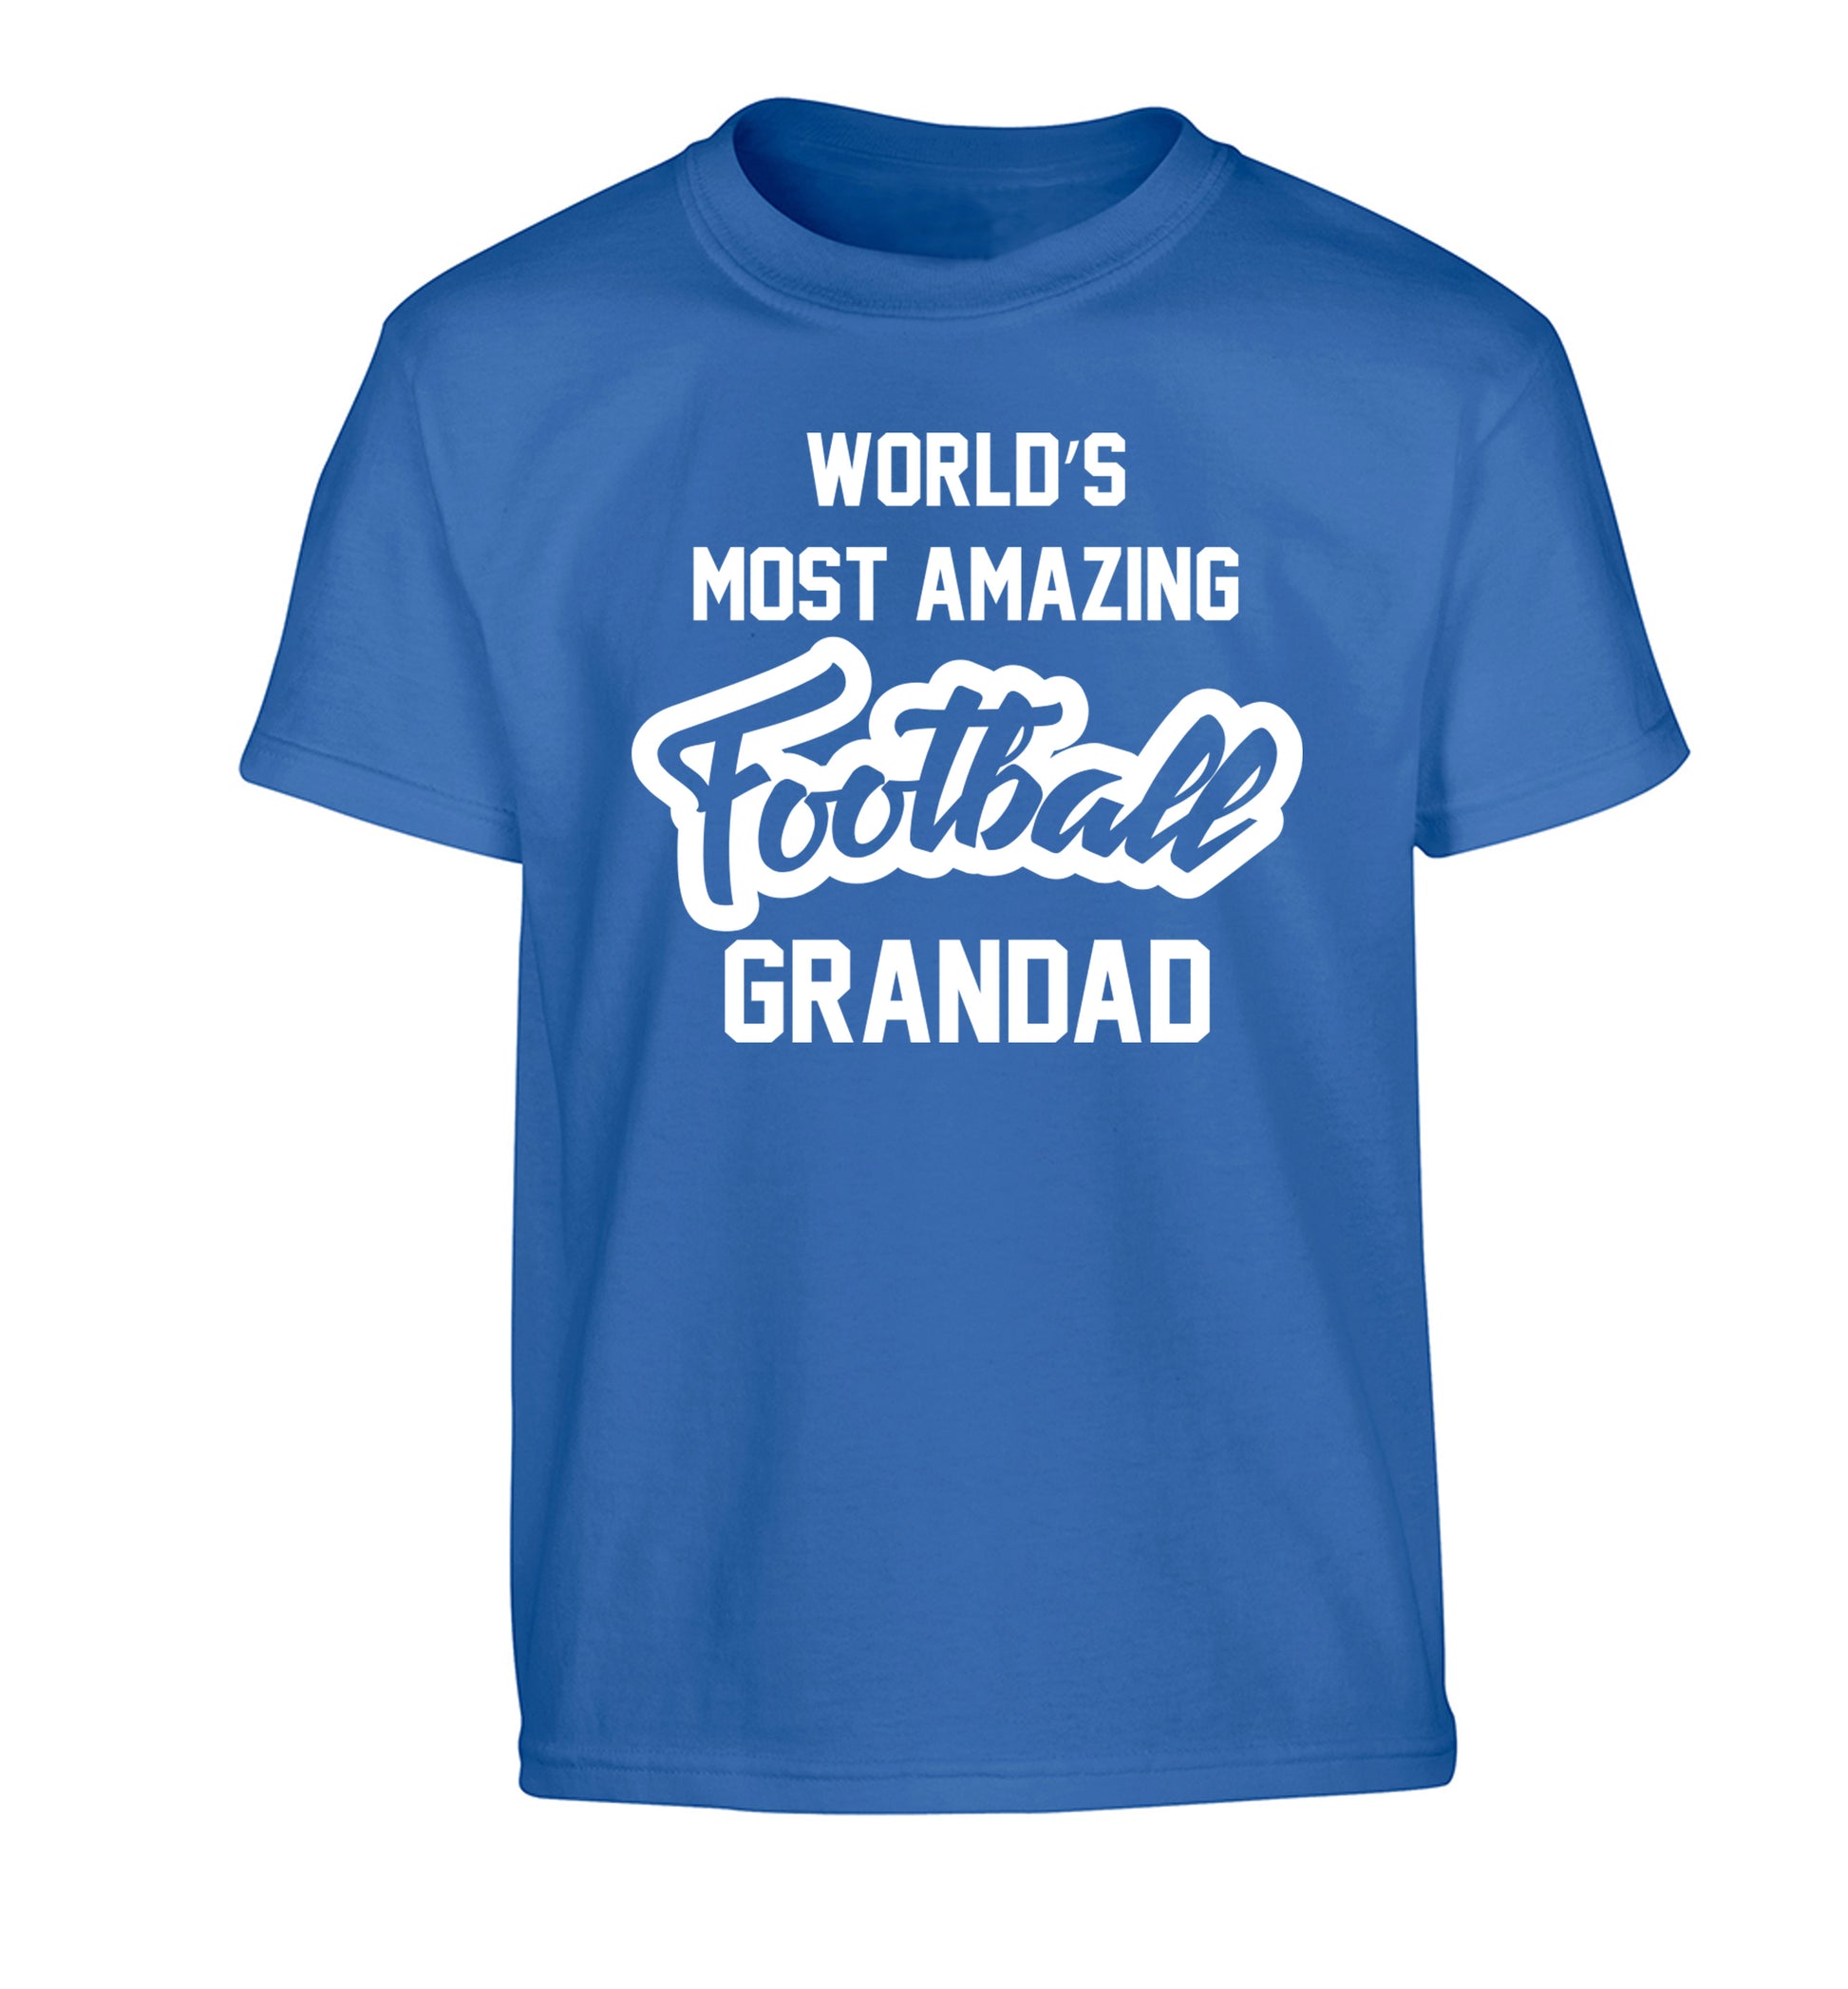 Worlds most amazing football grandad Children's blue Tshirt 12-14 Years